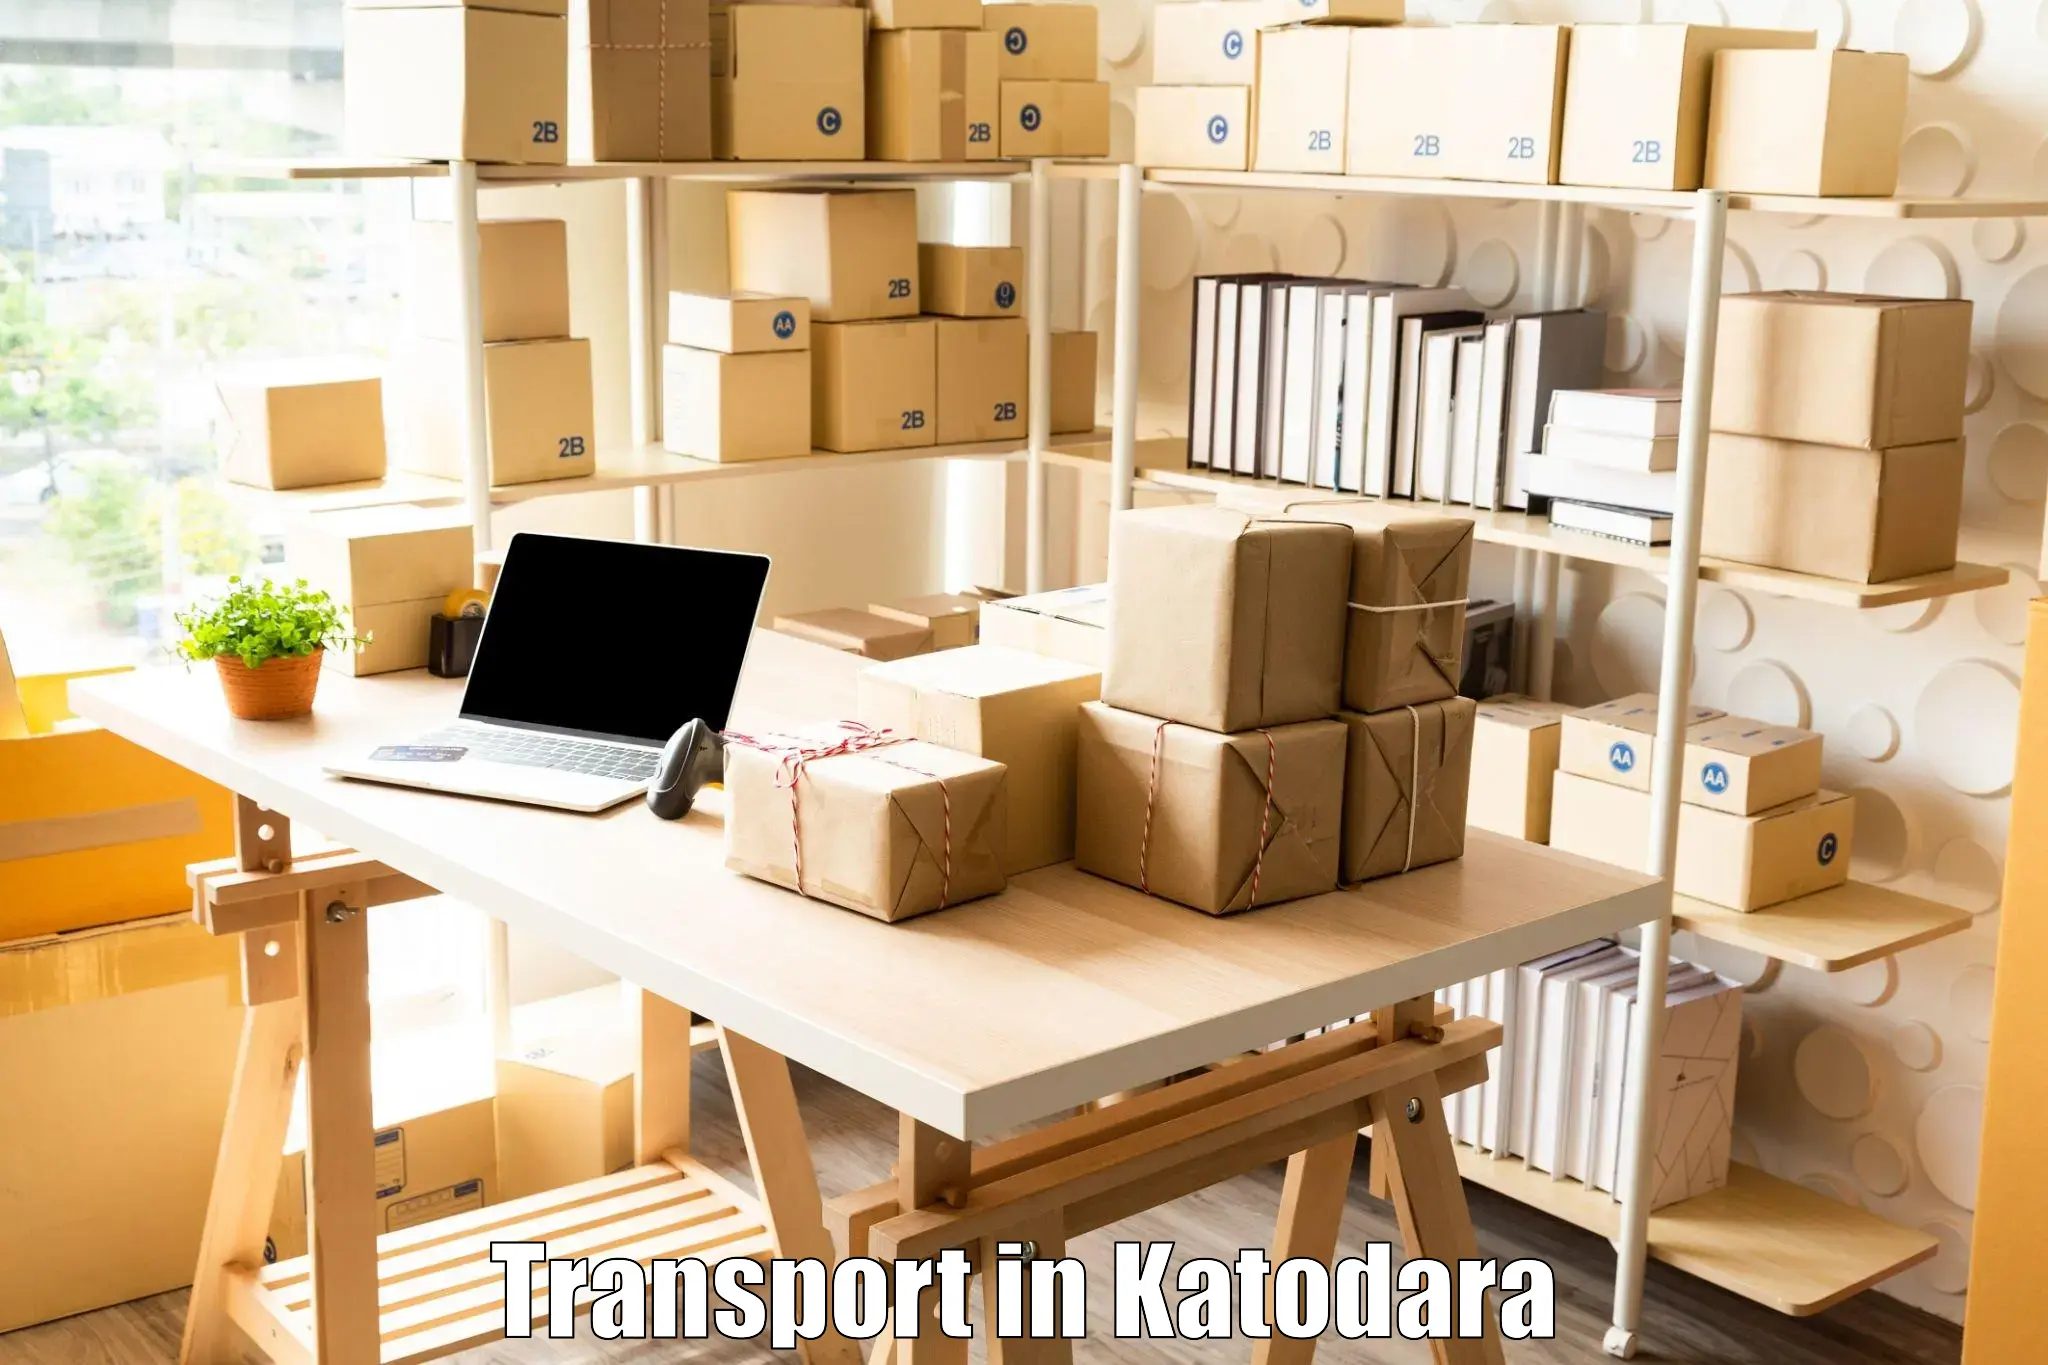 Shipping services in Katodara